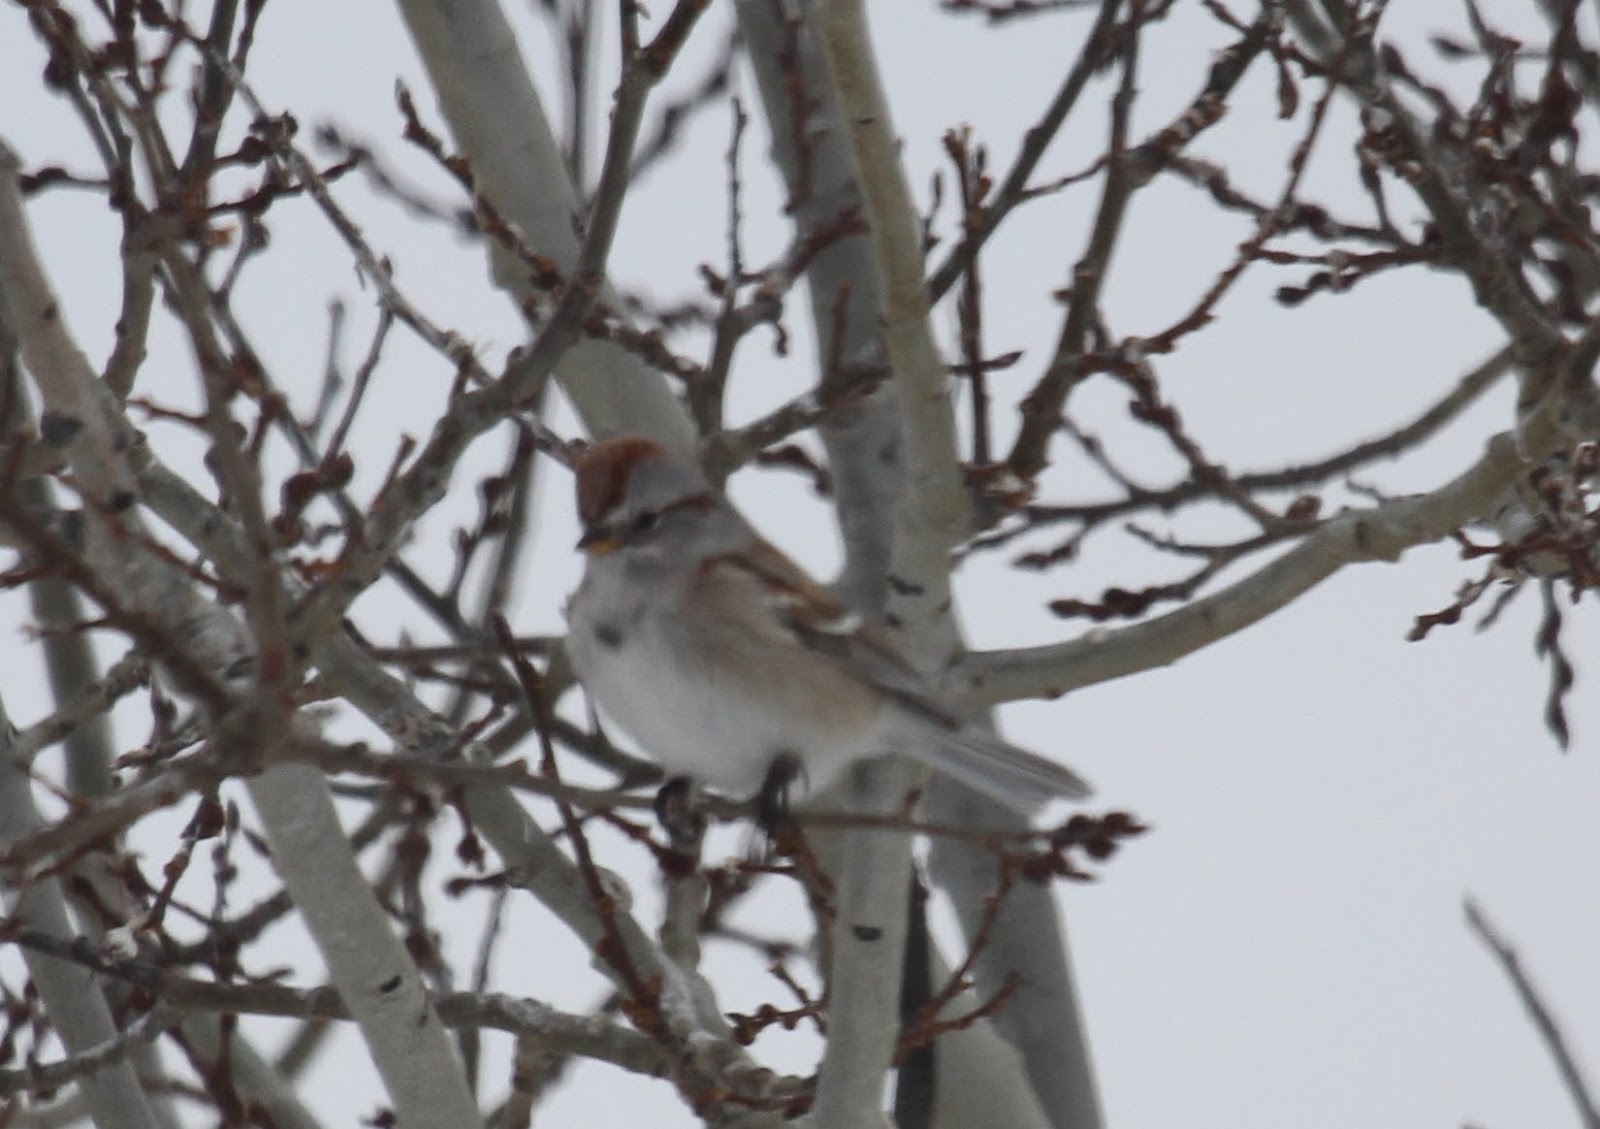 Graham's Birding Blog: Steamboat Springs, Colorado, 18 Jan 15